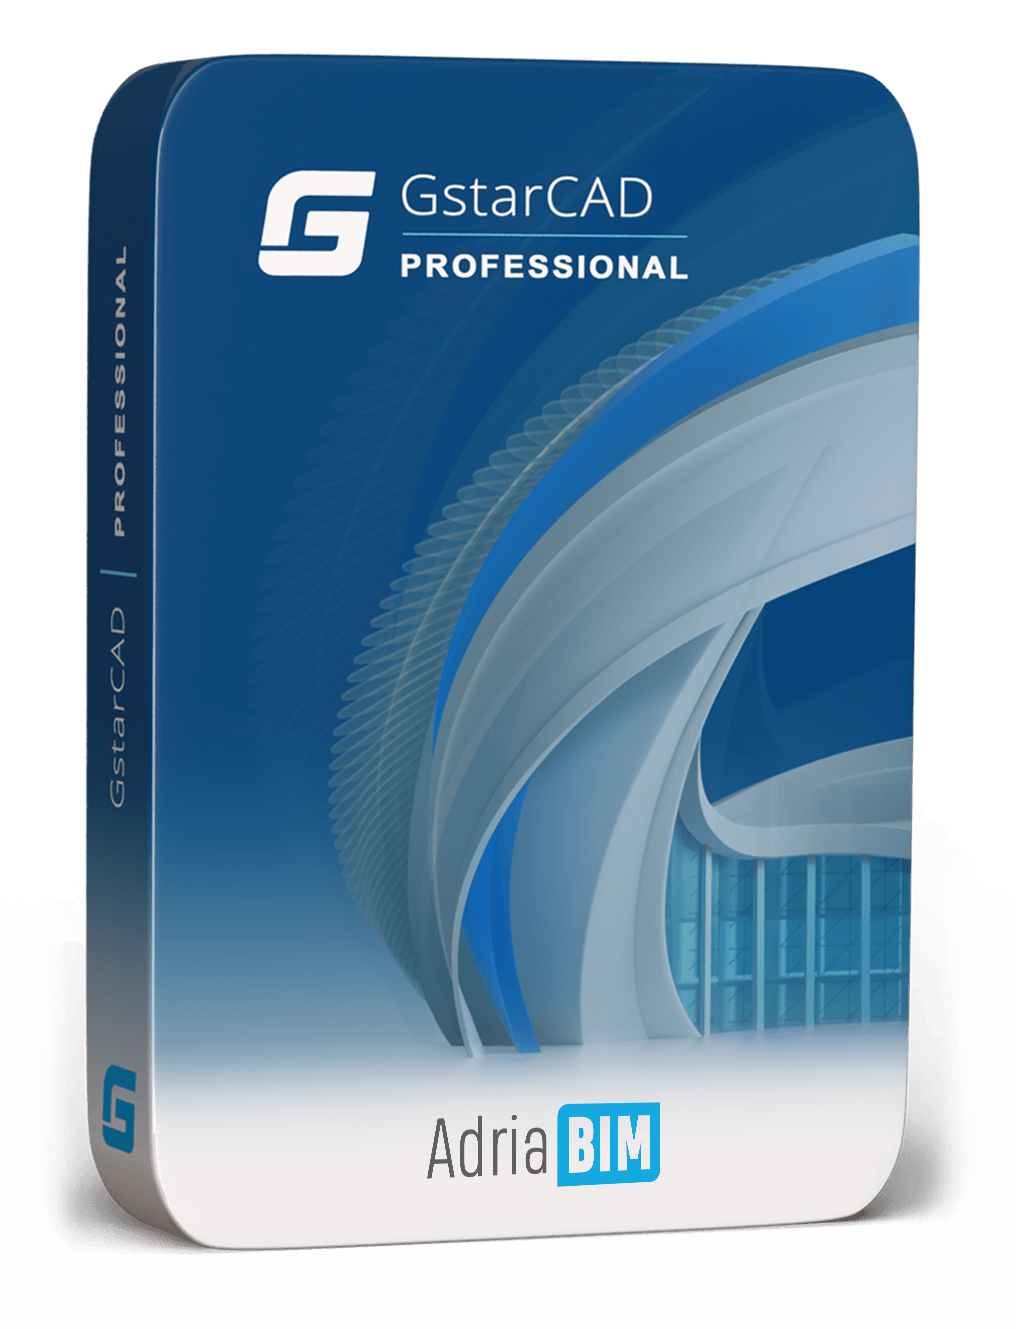 GstarCAD Professional - AutoCAD full version